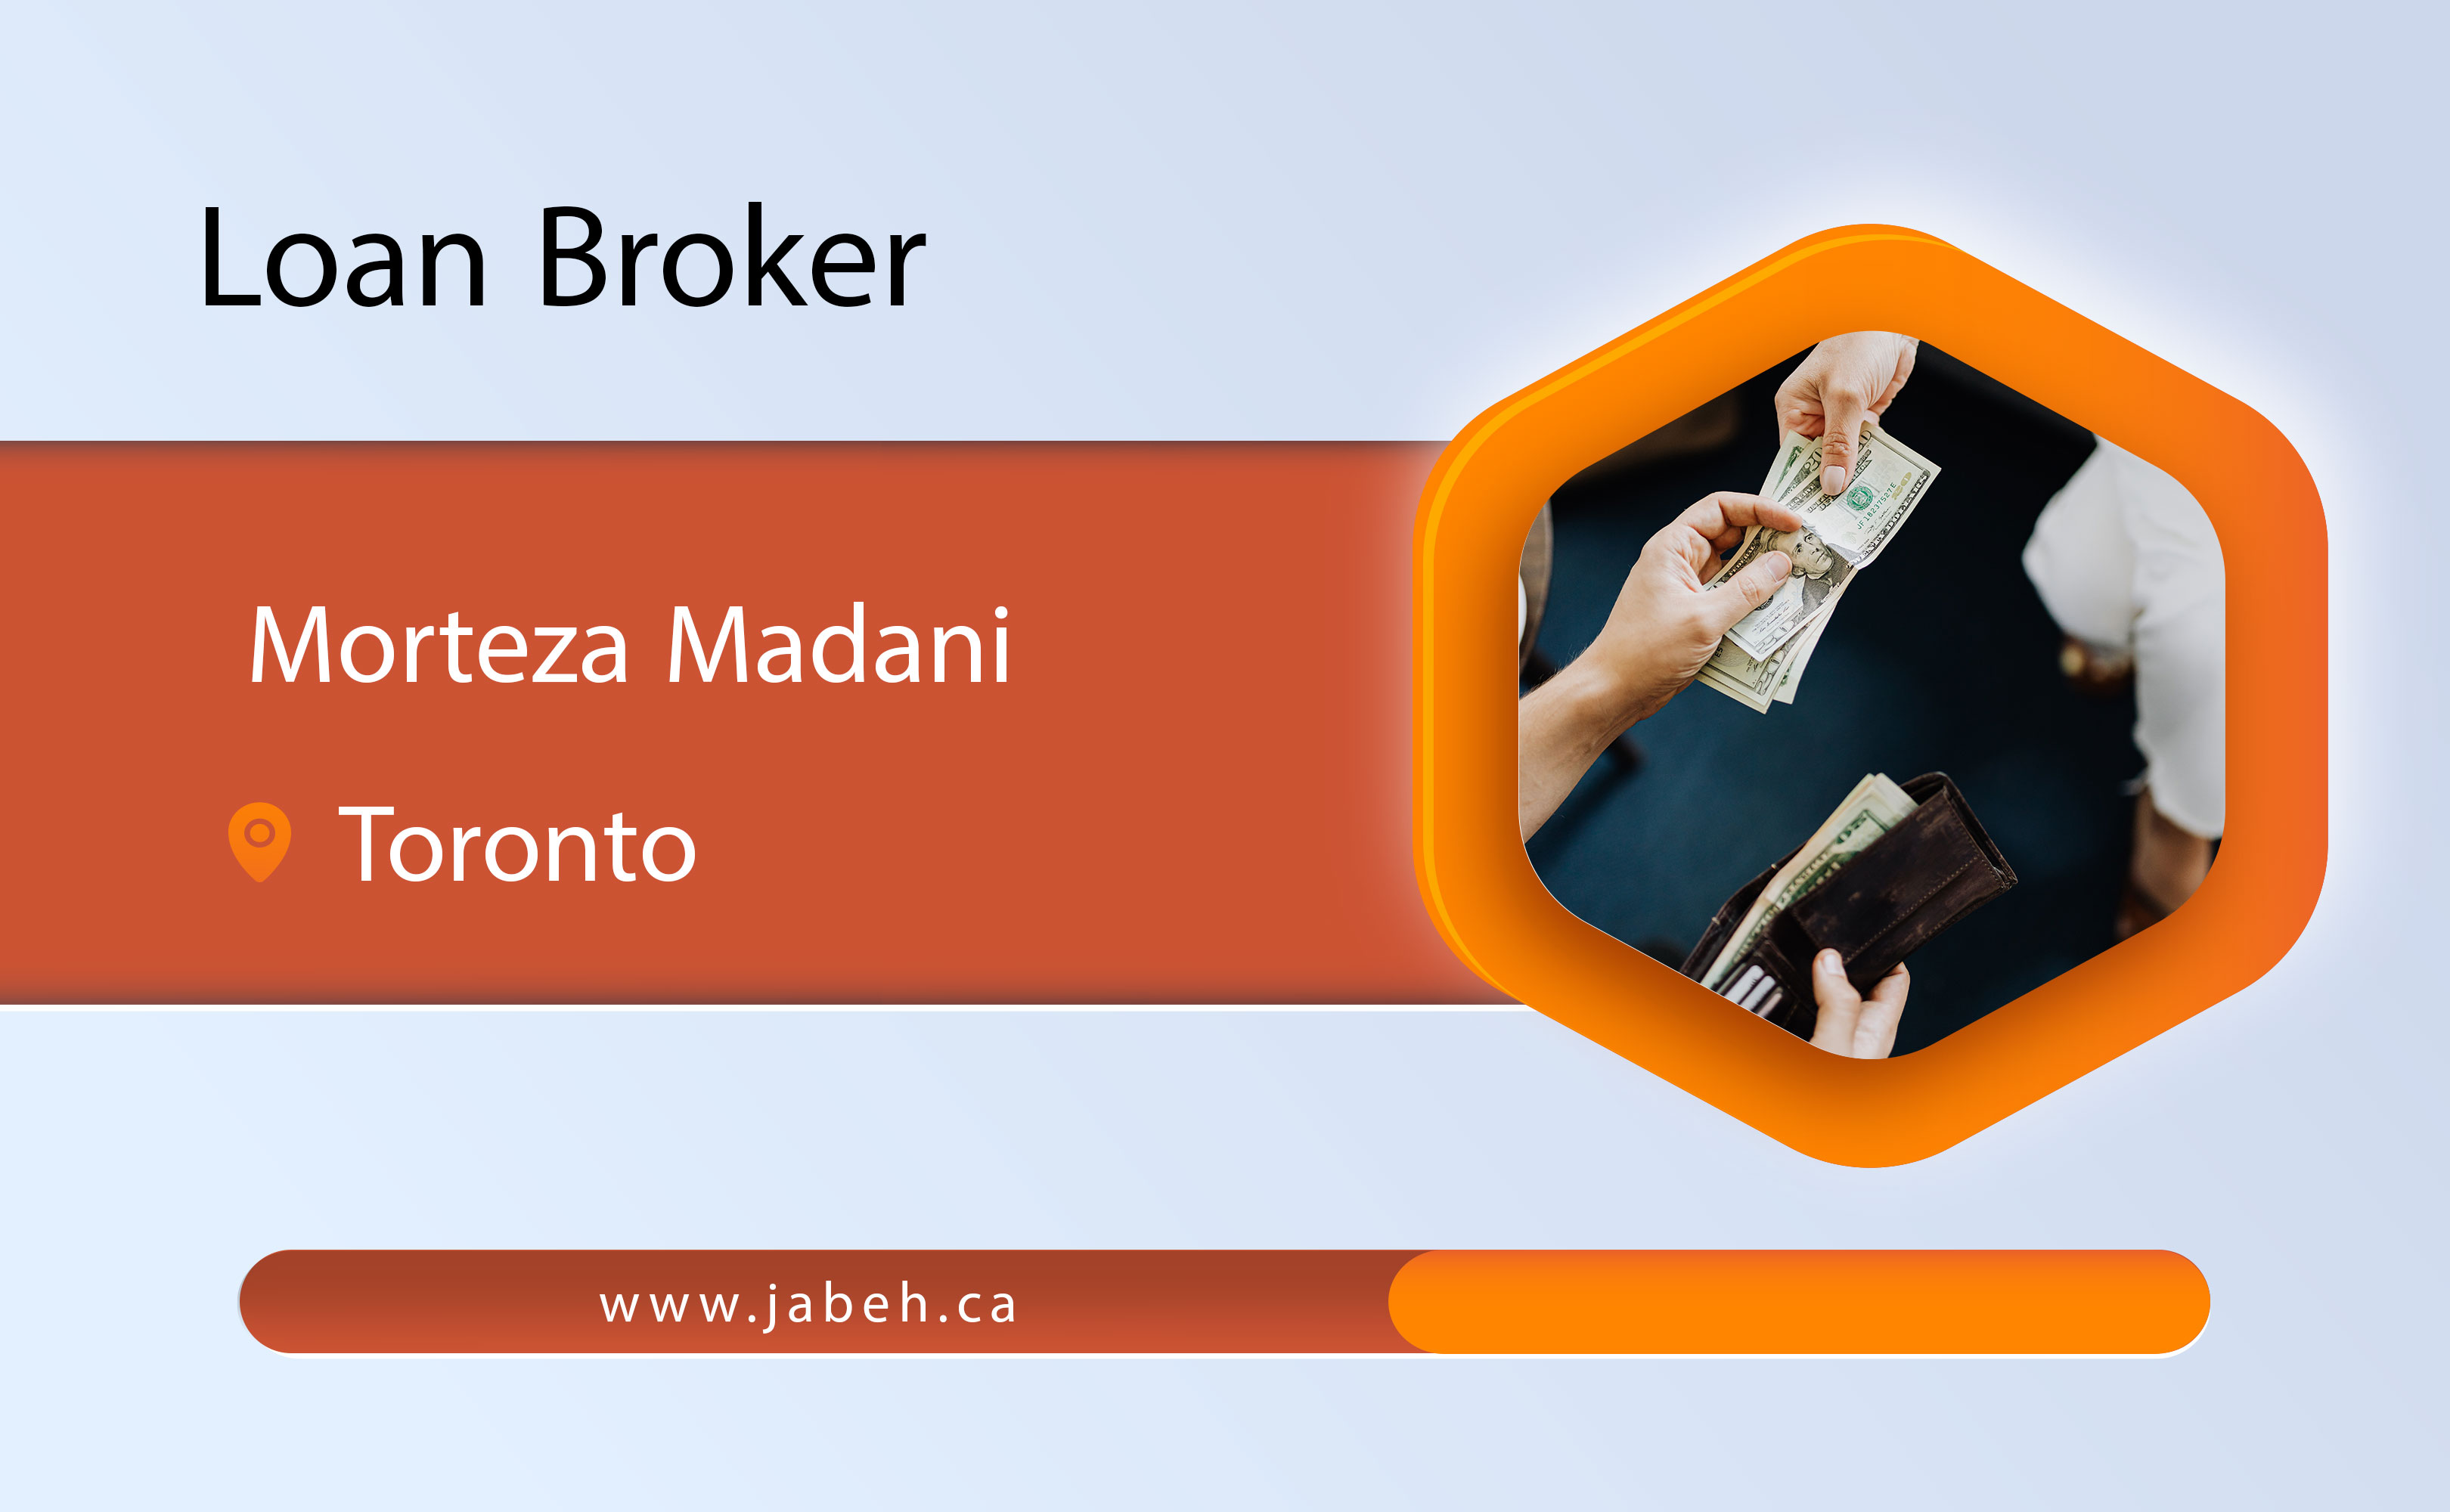 Iranian loan broker Morteza Madani in Toronto